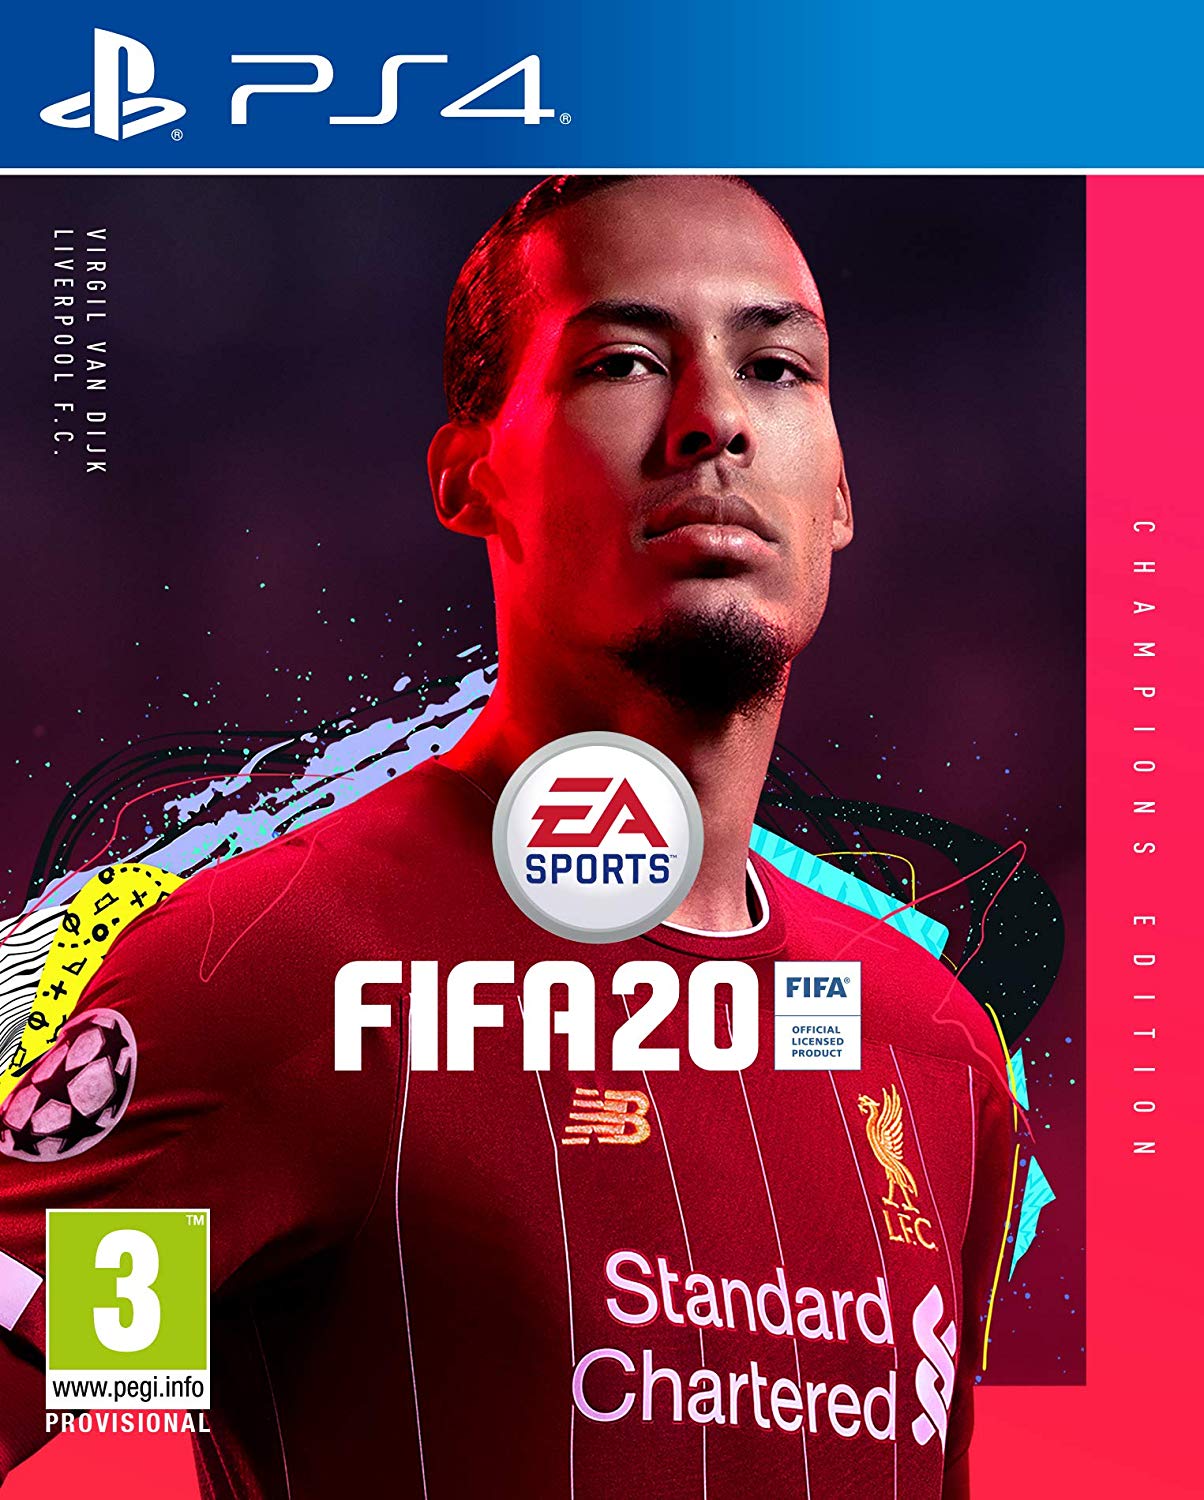 FIFA 20 Champions Edition PS4